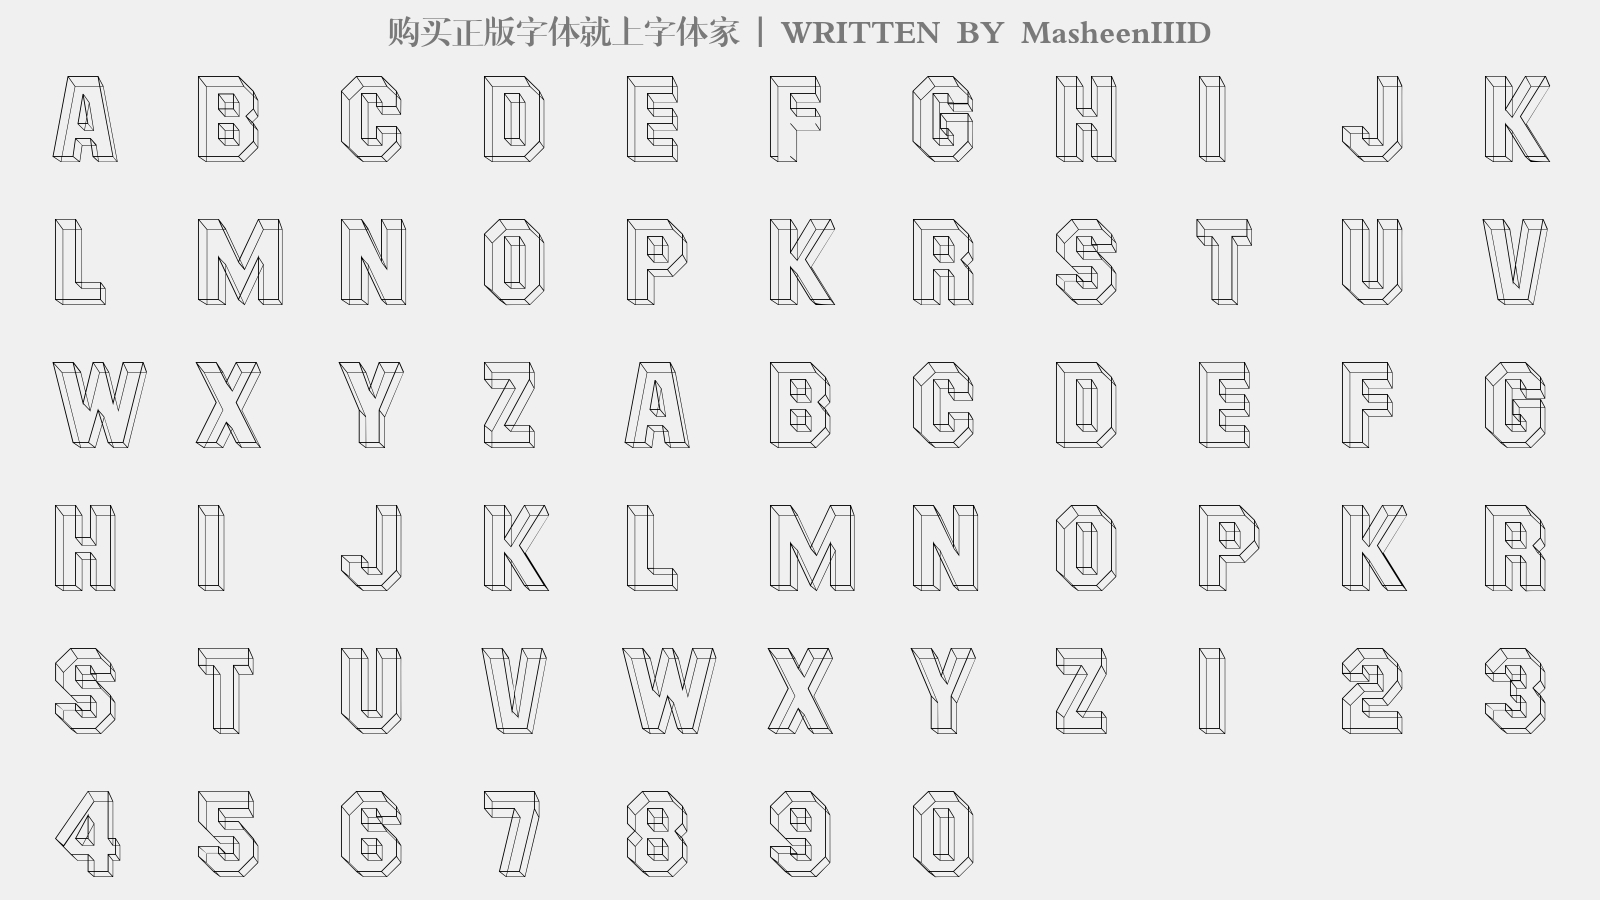 MasheenIIID - 大写字母/小写字母/数字